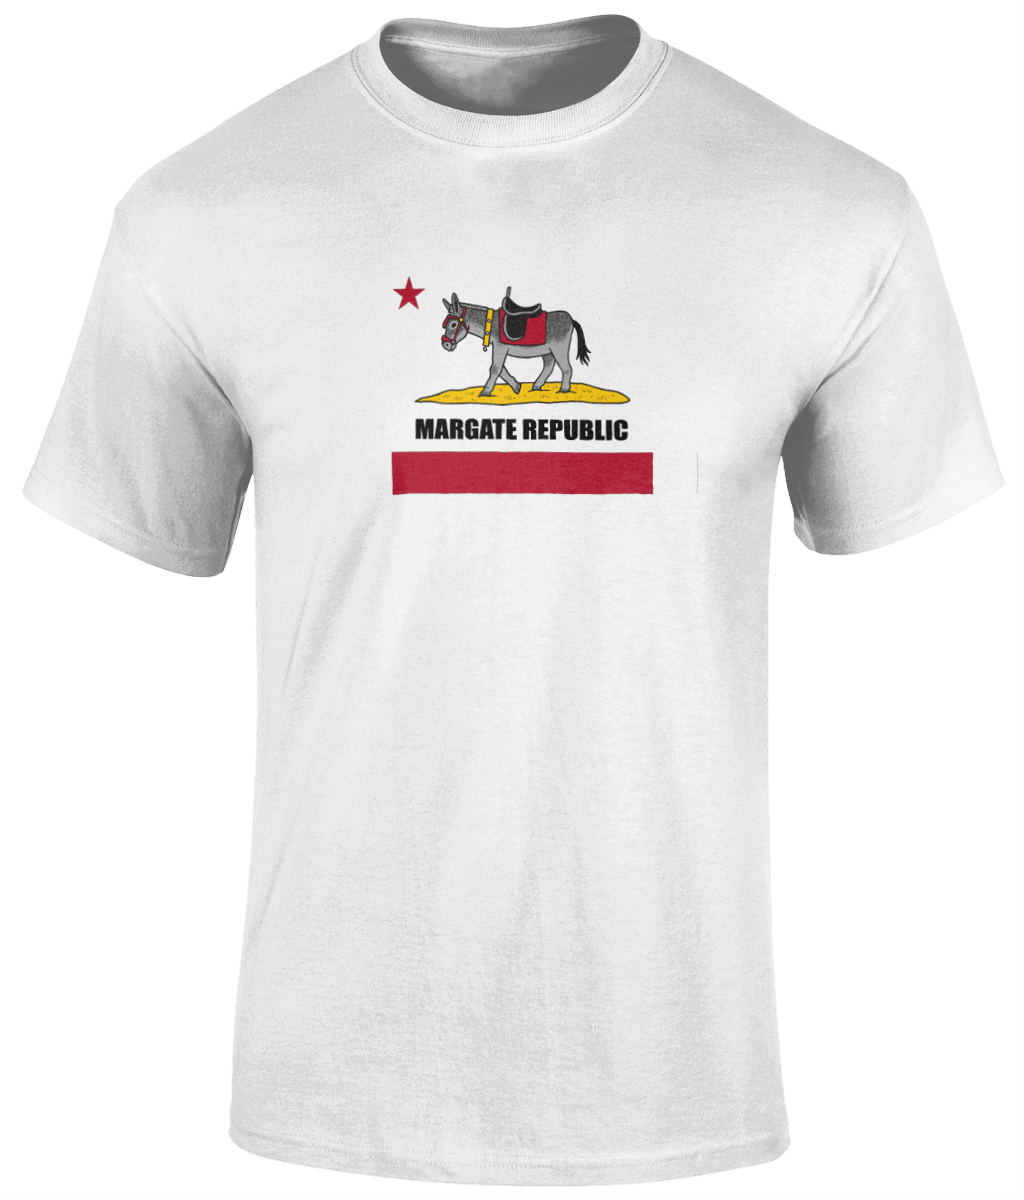 Margate Republic T-Shirt